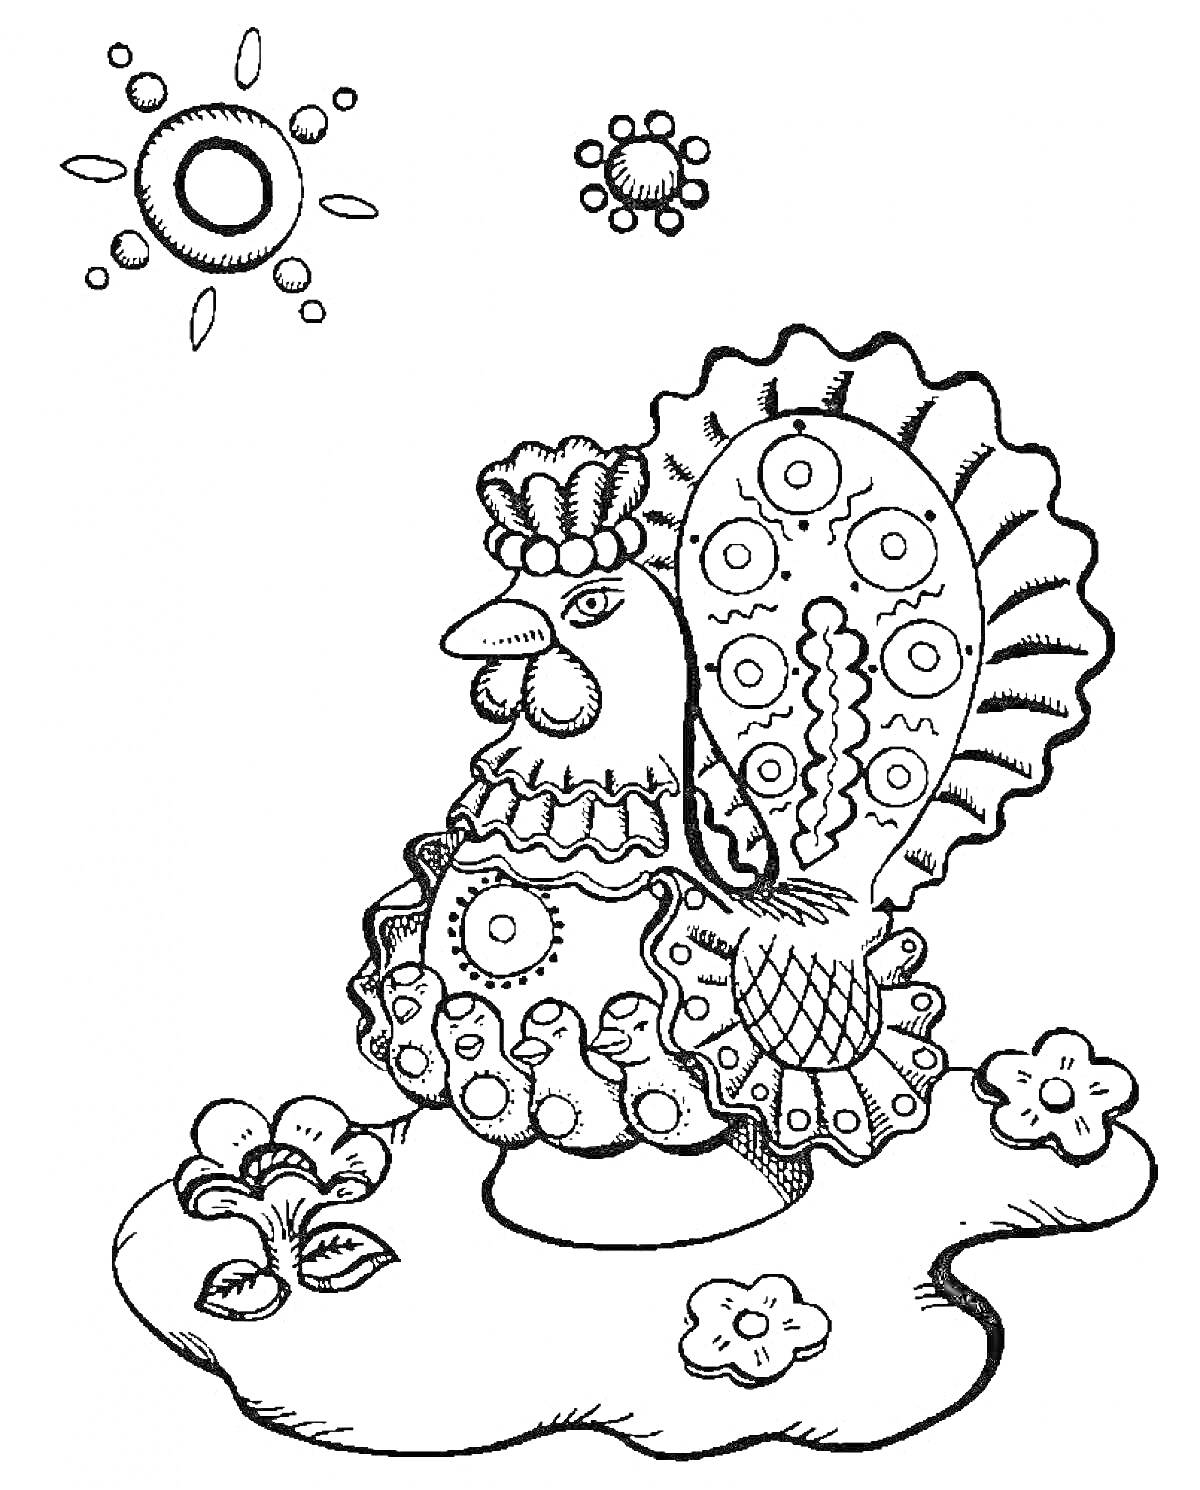 Раскраска Петух с узорами, цветы, солнце на фоне